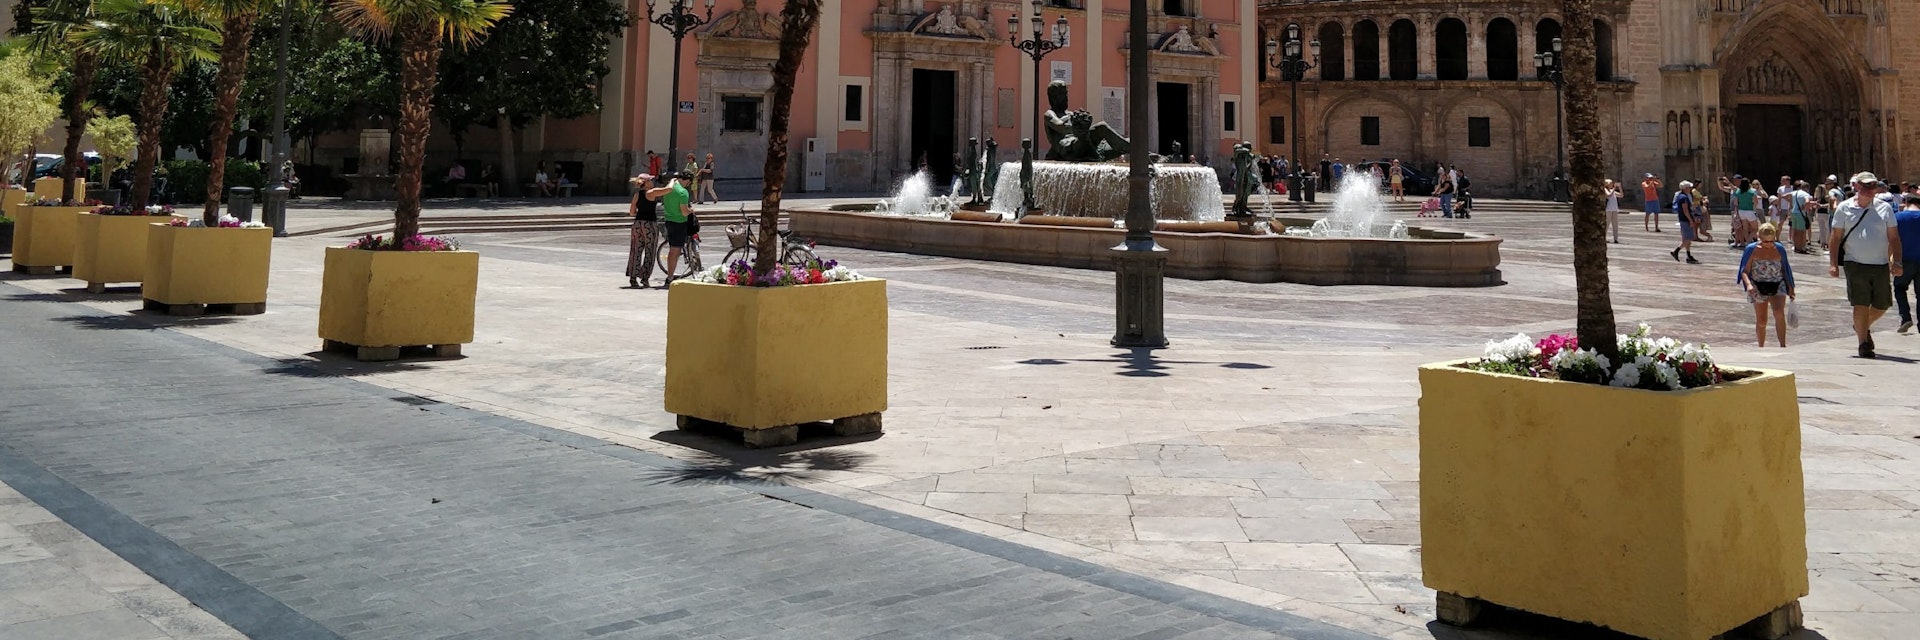 Plaza de la Virgen wide shot.